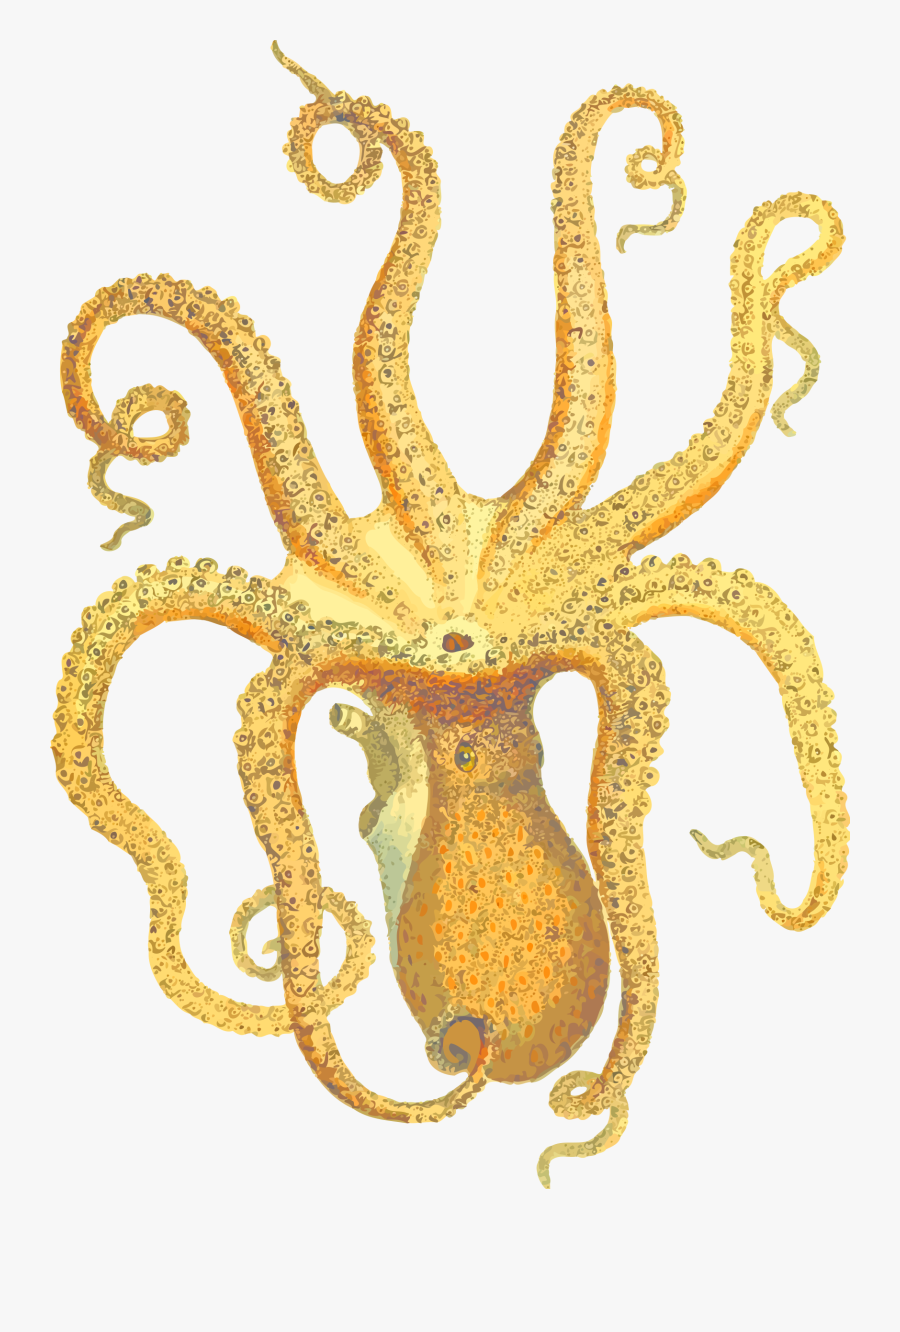 Octopus - Vintage Octopus Science Illustration, Transparent Clipart